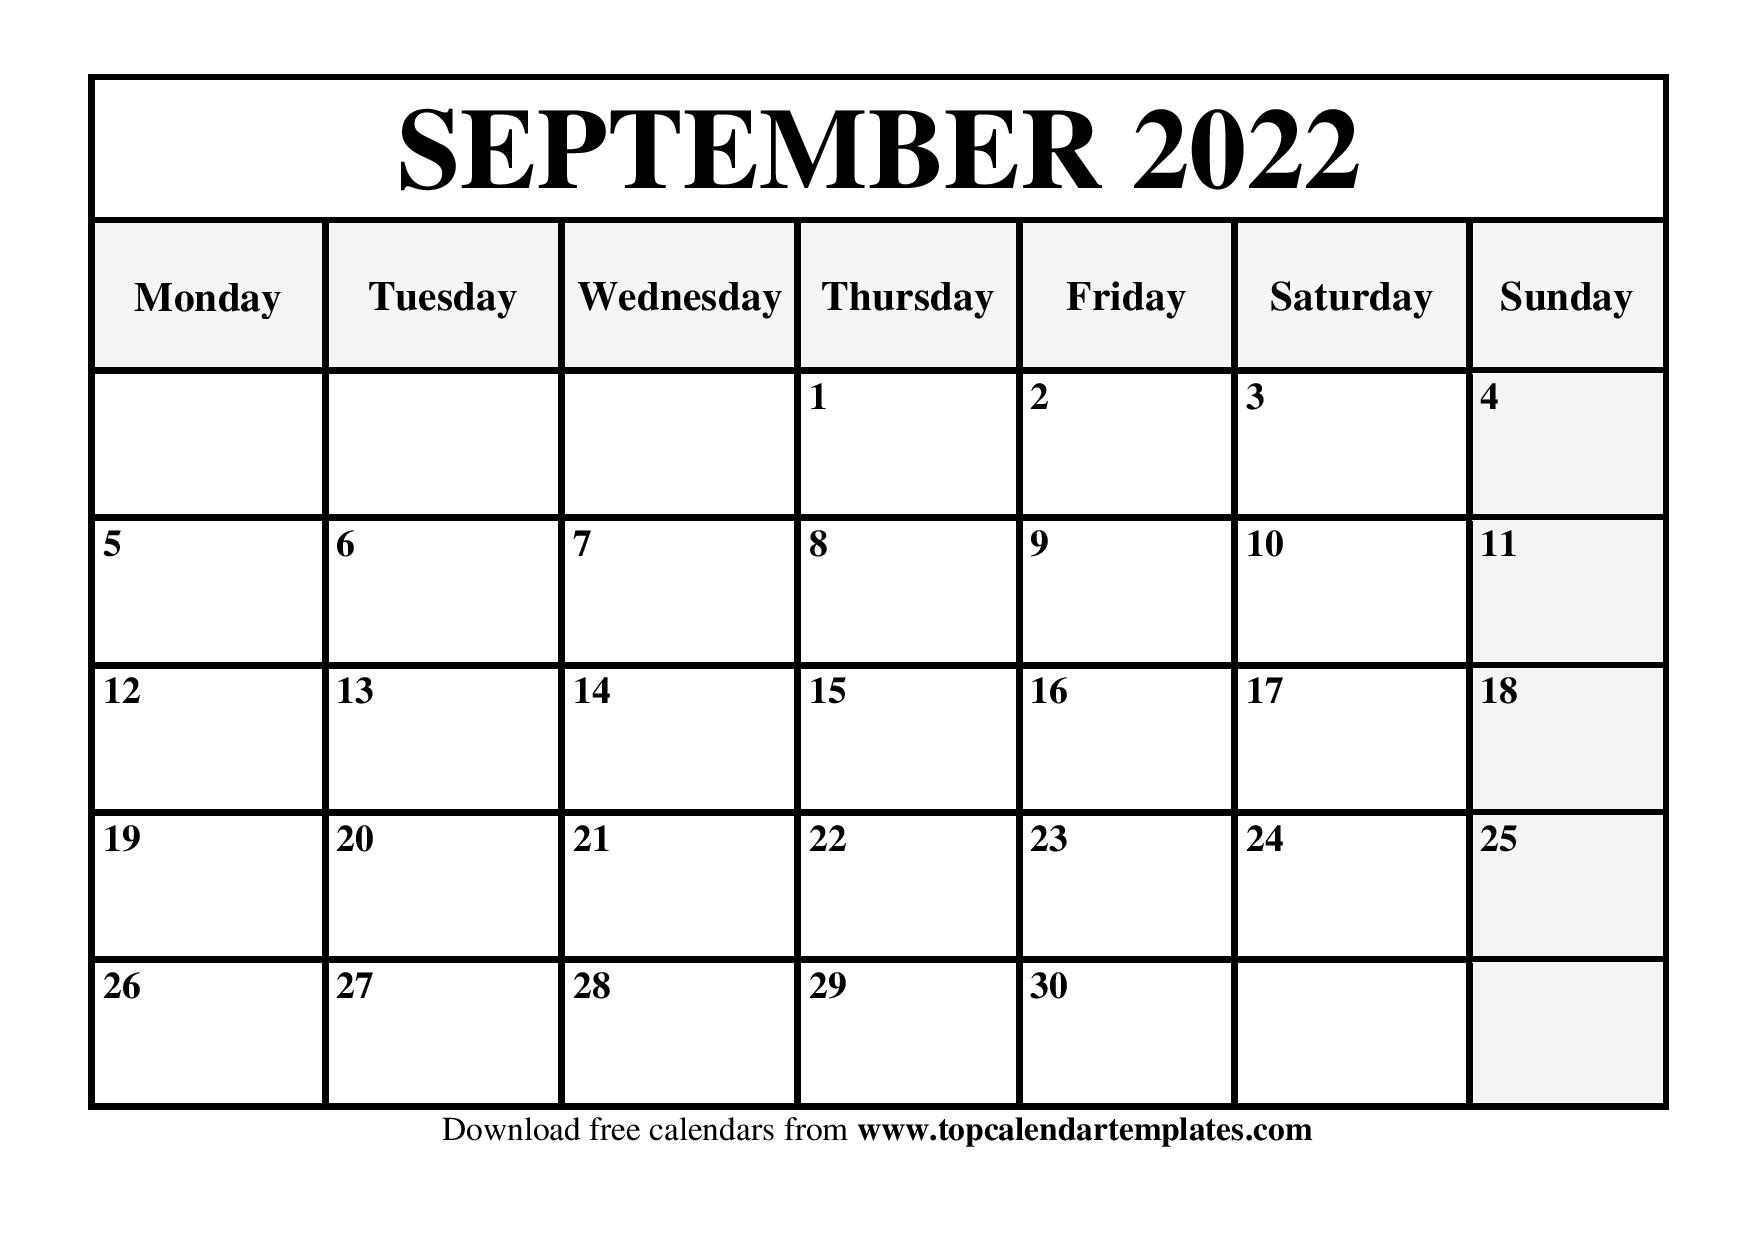 Free September 2022 Calendar Printable Calendar September 2022 Templates - Pdf, Word, Excel